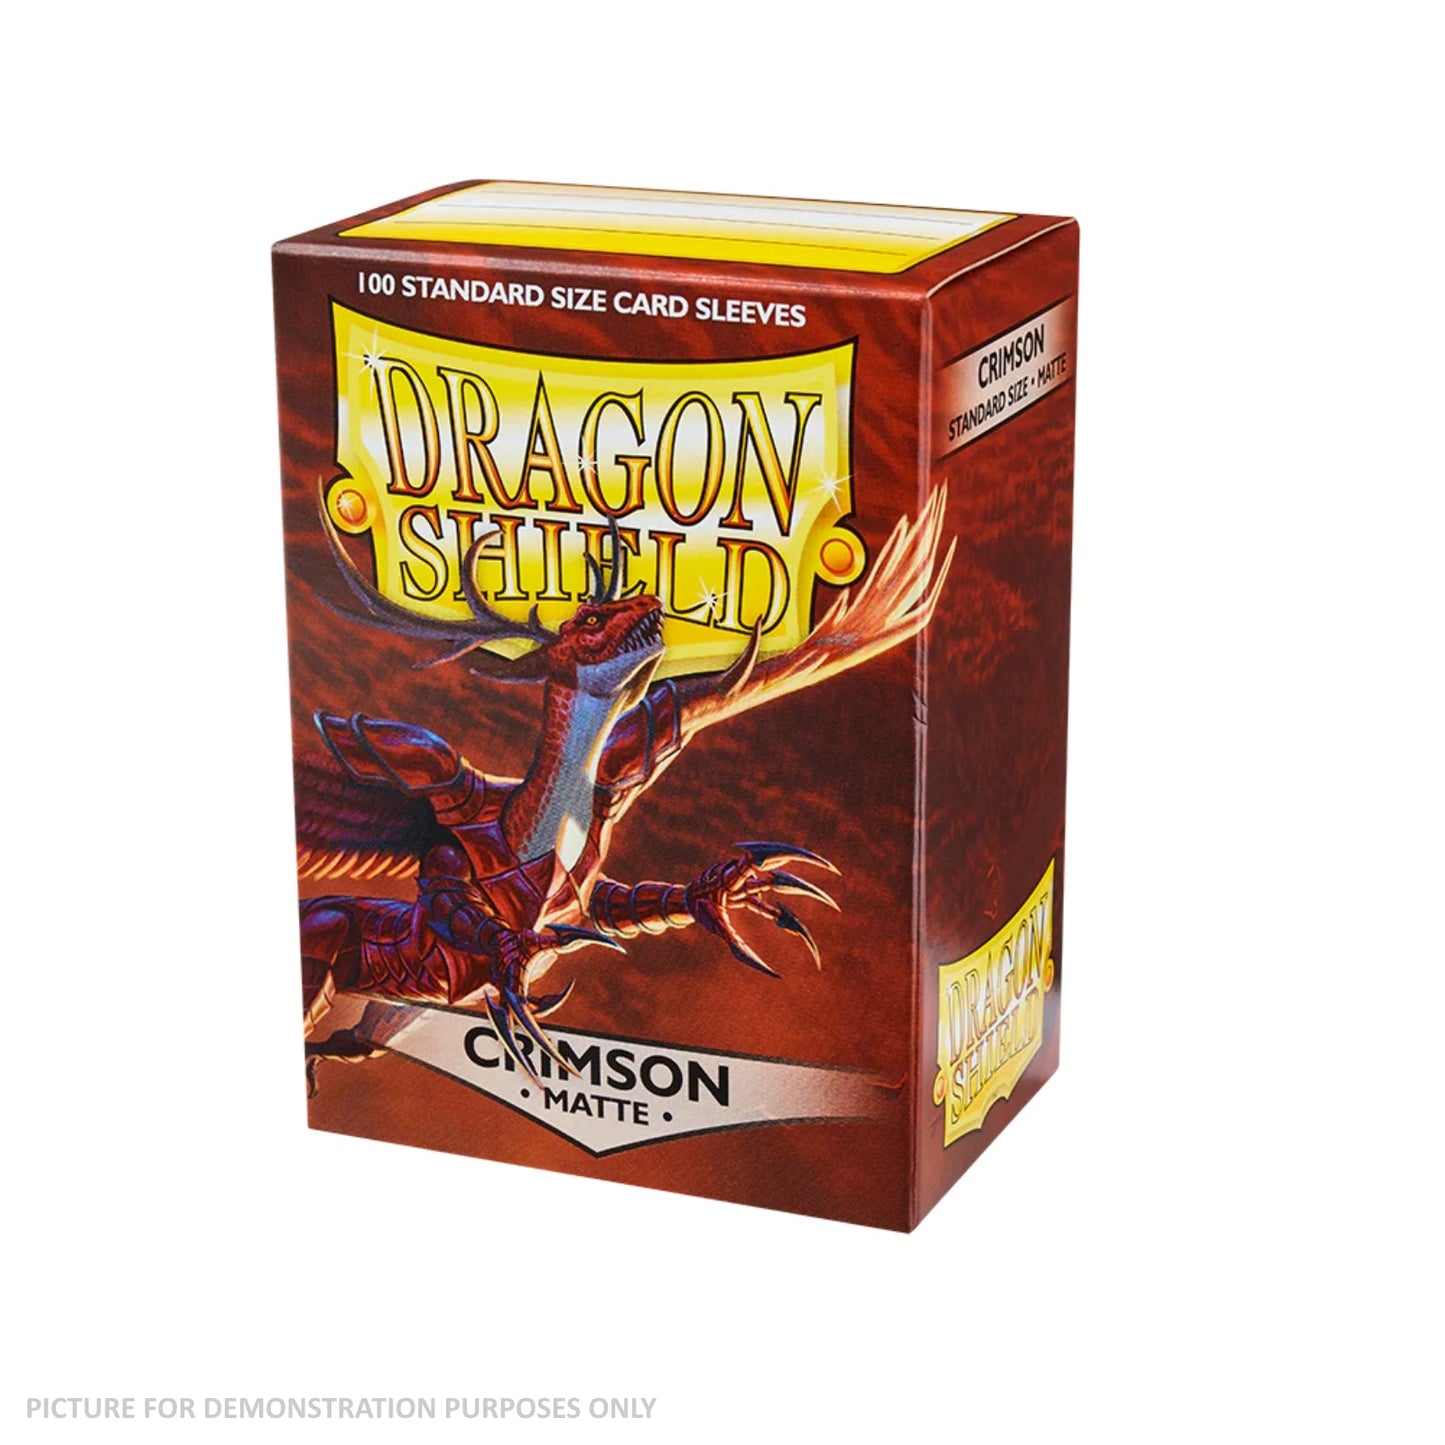 Dragon Shield 100 Standard Size Card Sleeves - Matte Crimson